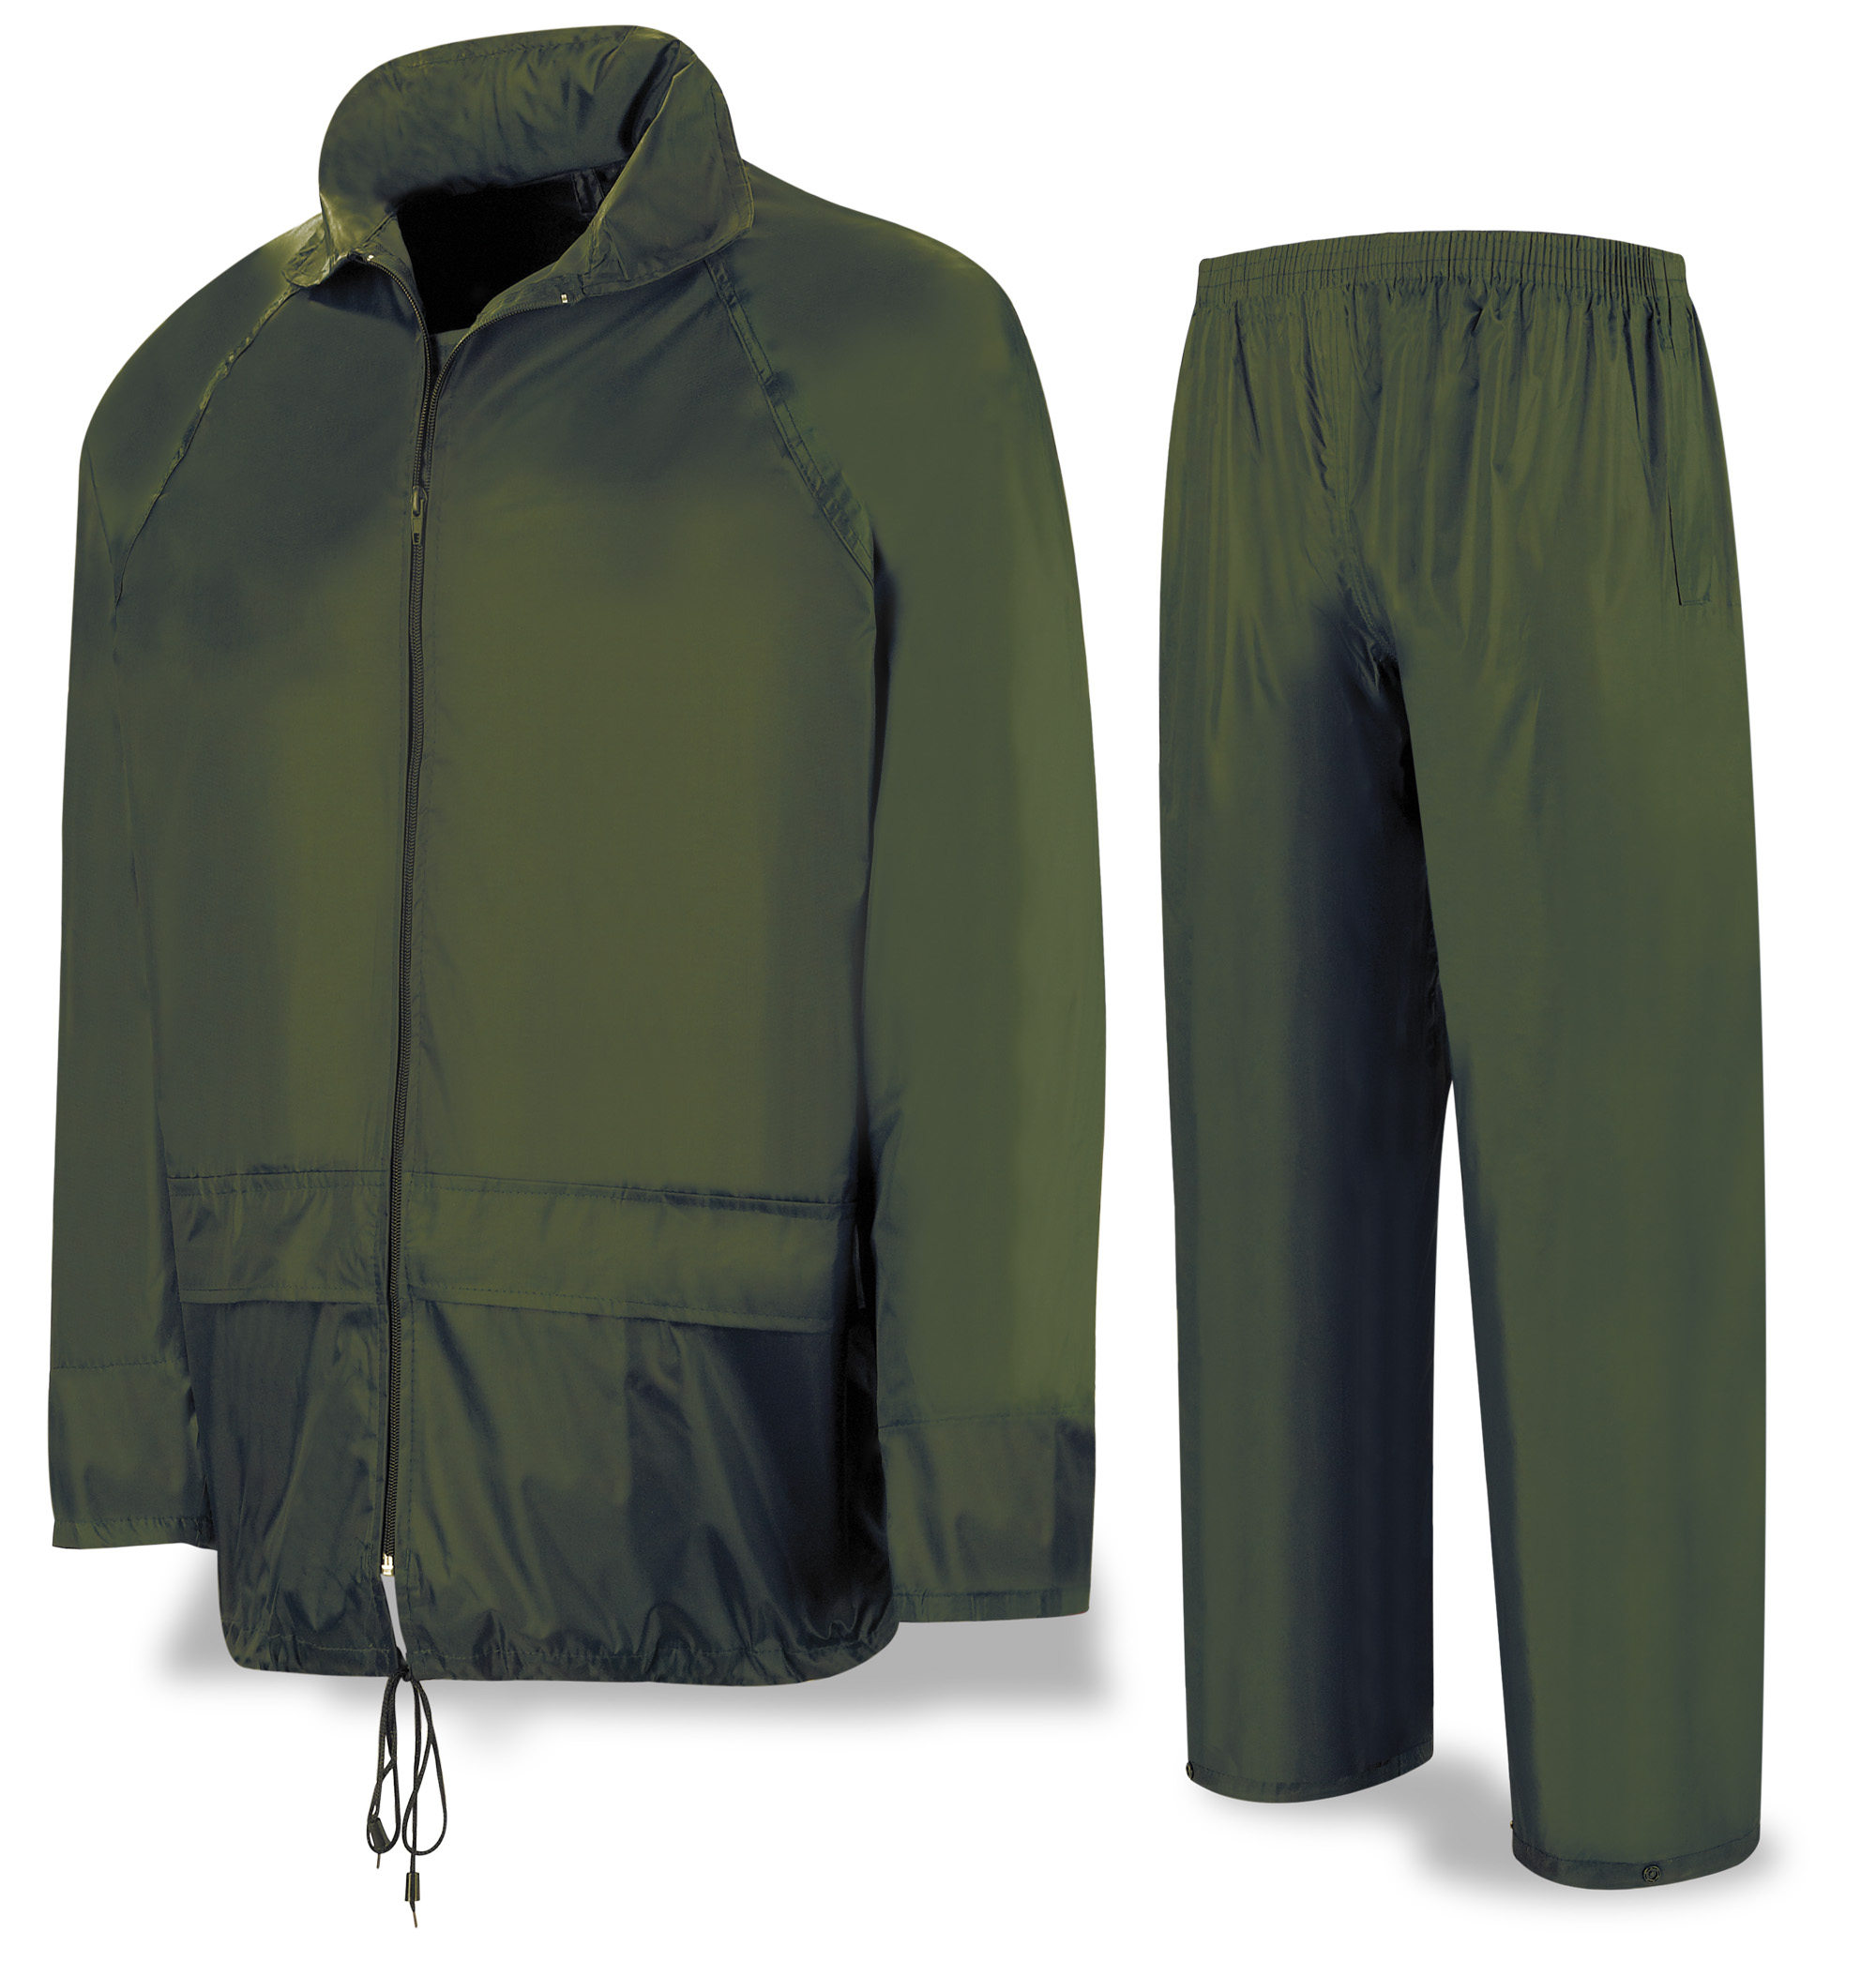 188-TAIV Coats and Rain Gear Rain Gear Water suit. ENGINEER. Green